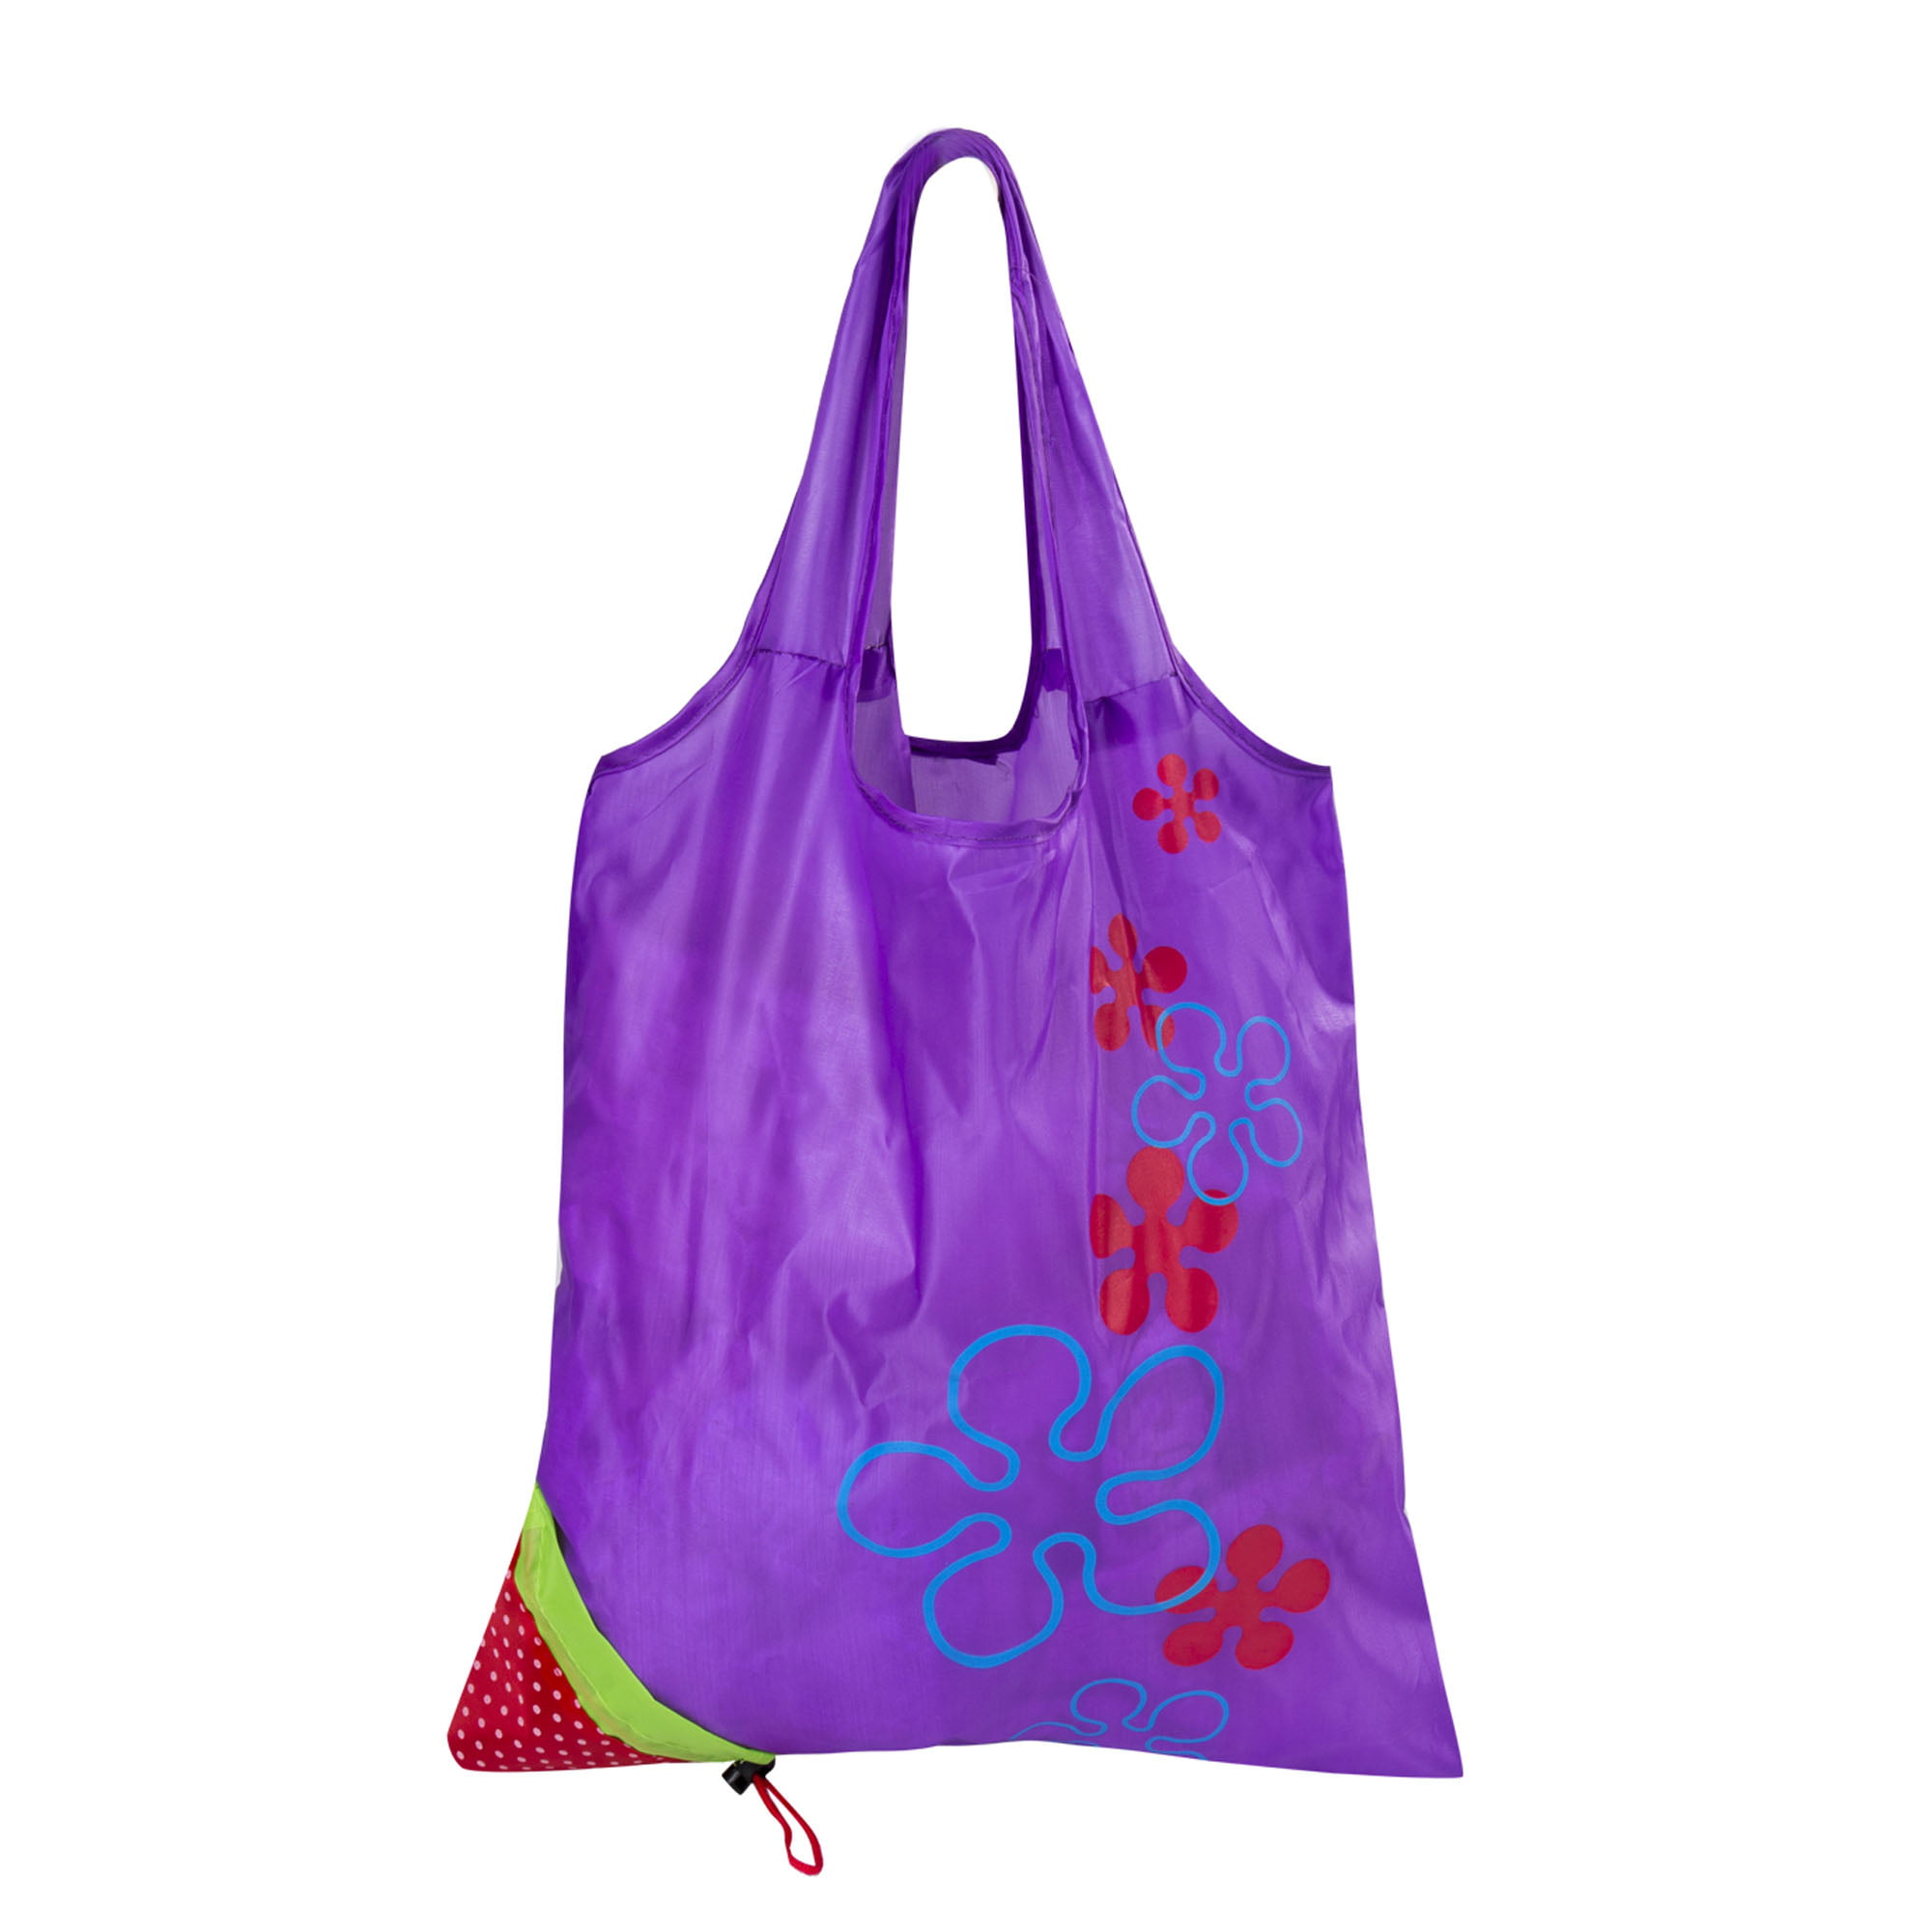 Visland Reusable Grocery Bags, Foldable Shopping Bags, Waterproof Machine Washable Tote Bags Large Capacity Shoulder Bag, Men's, Purple